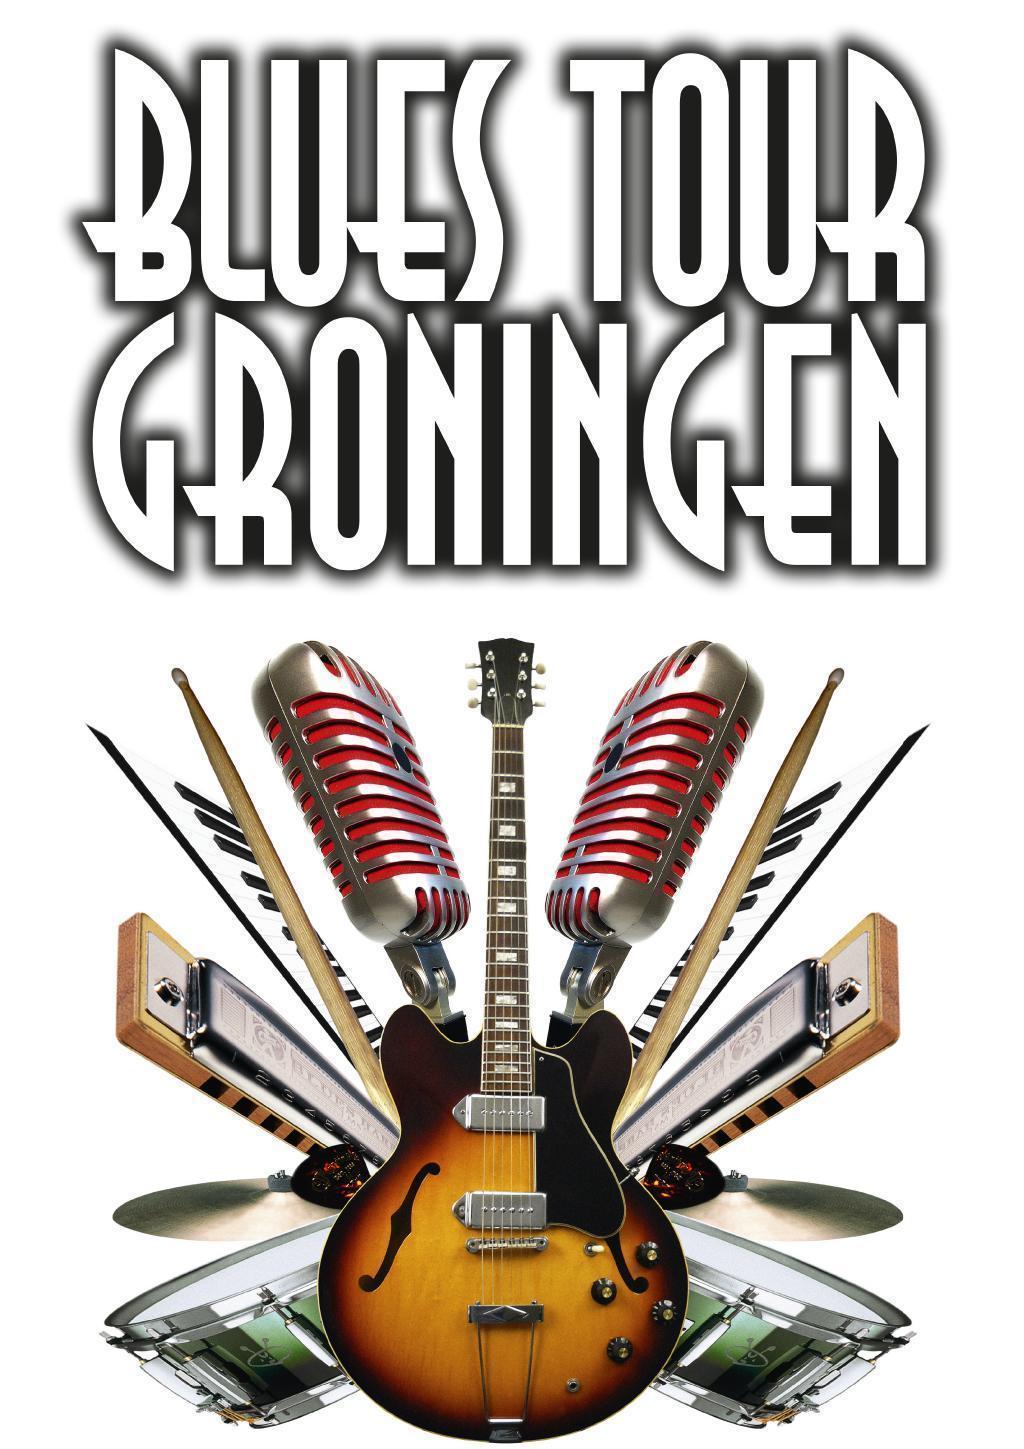 Big Bo - Live at Bluestour Groningen